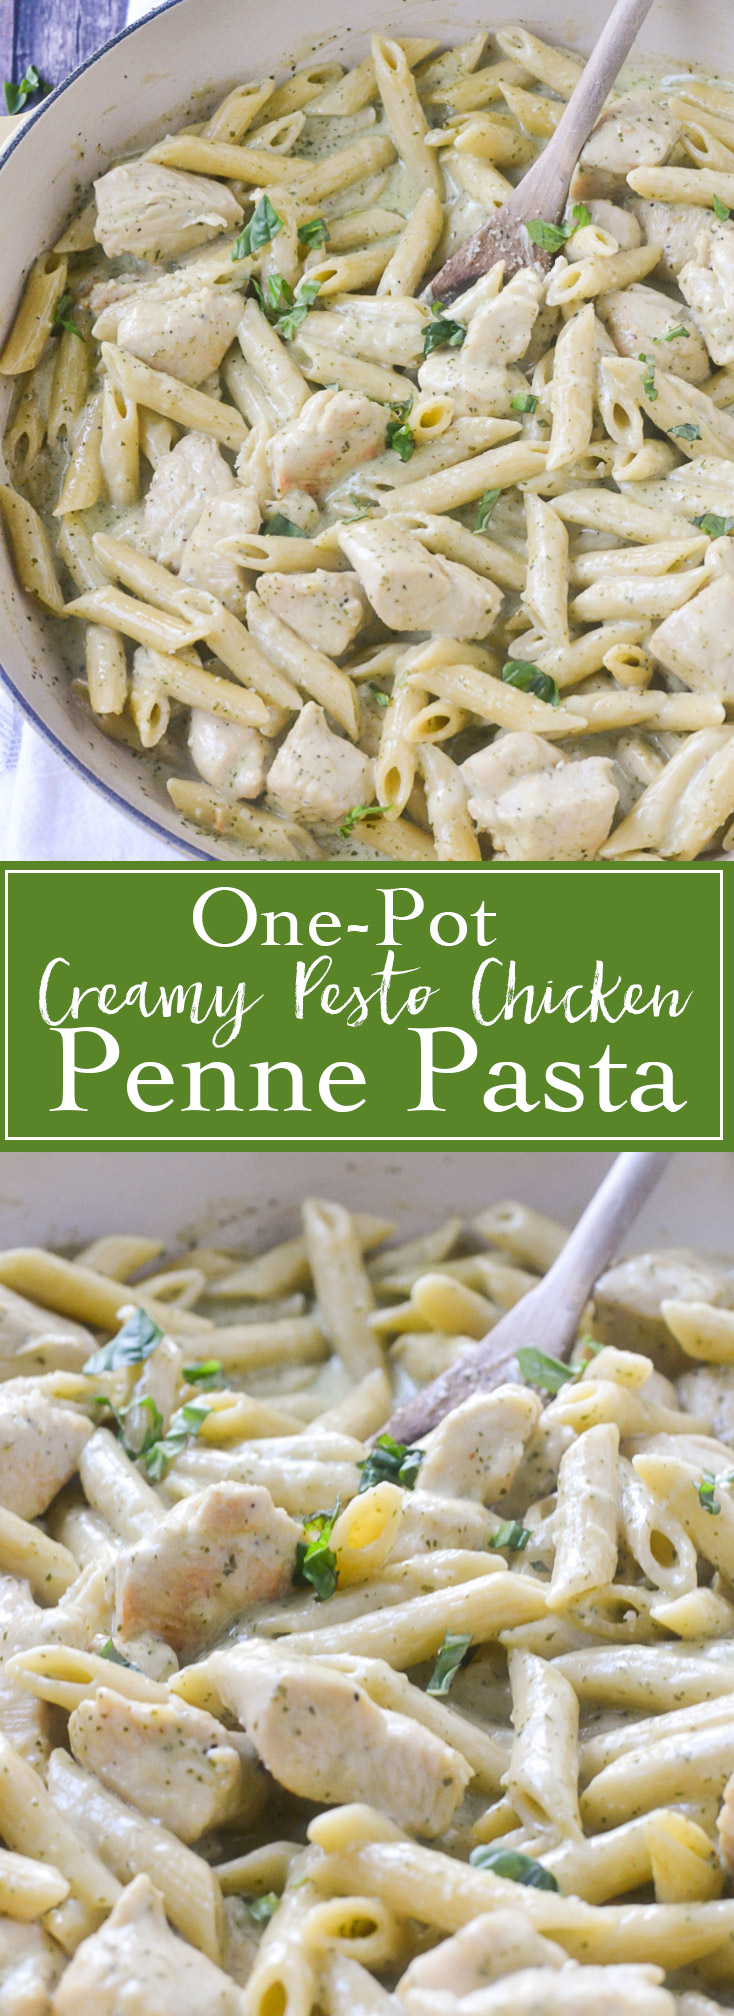 One-Pot Creamy Pesto Chicken Penne Pasta |www.motherthyme.com